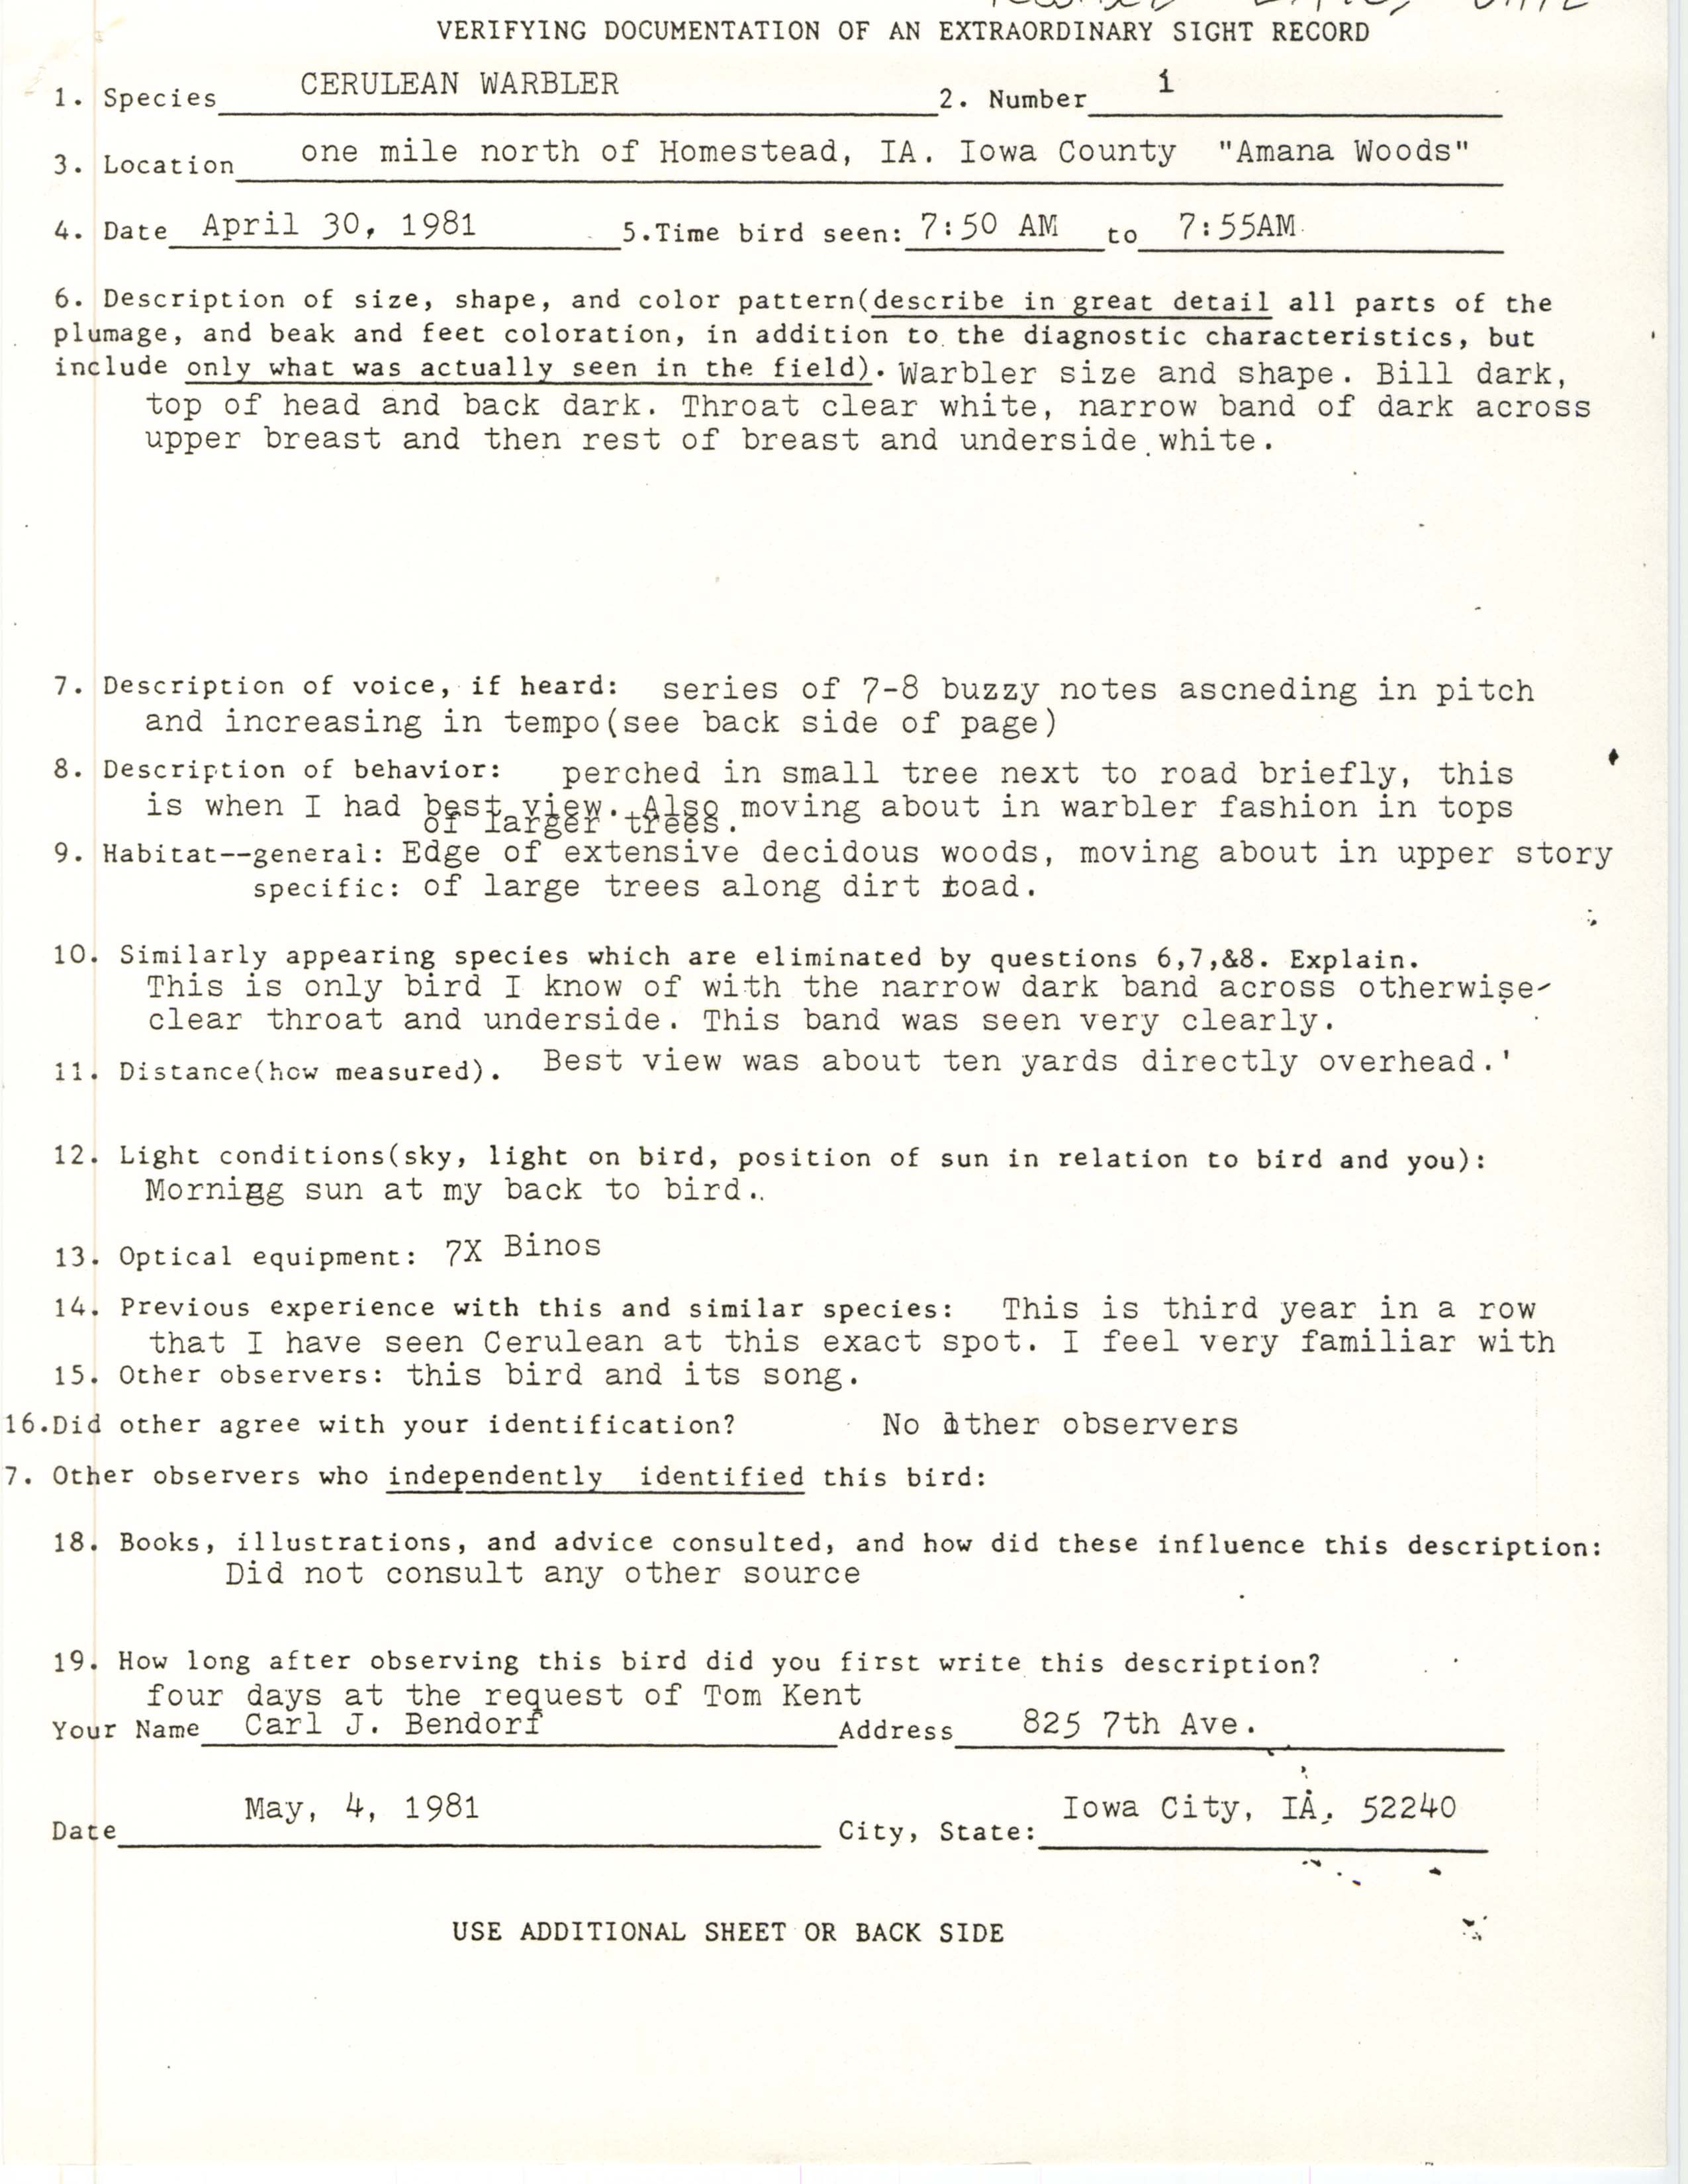 Rare bird documentation form for Cerulean Warbler at Amana Woods, 1981